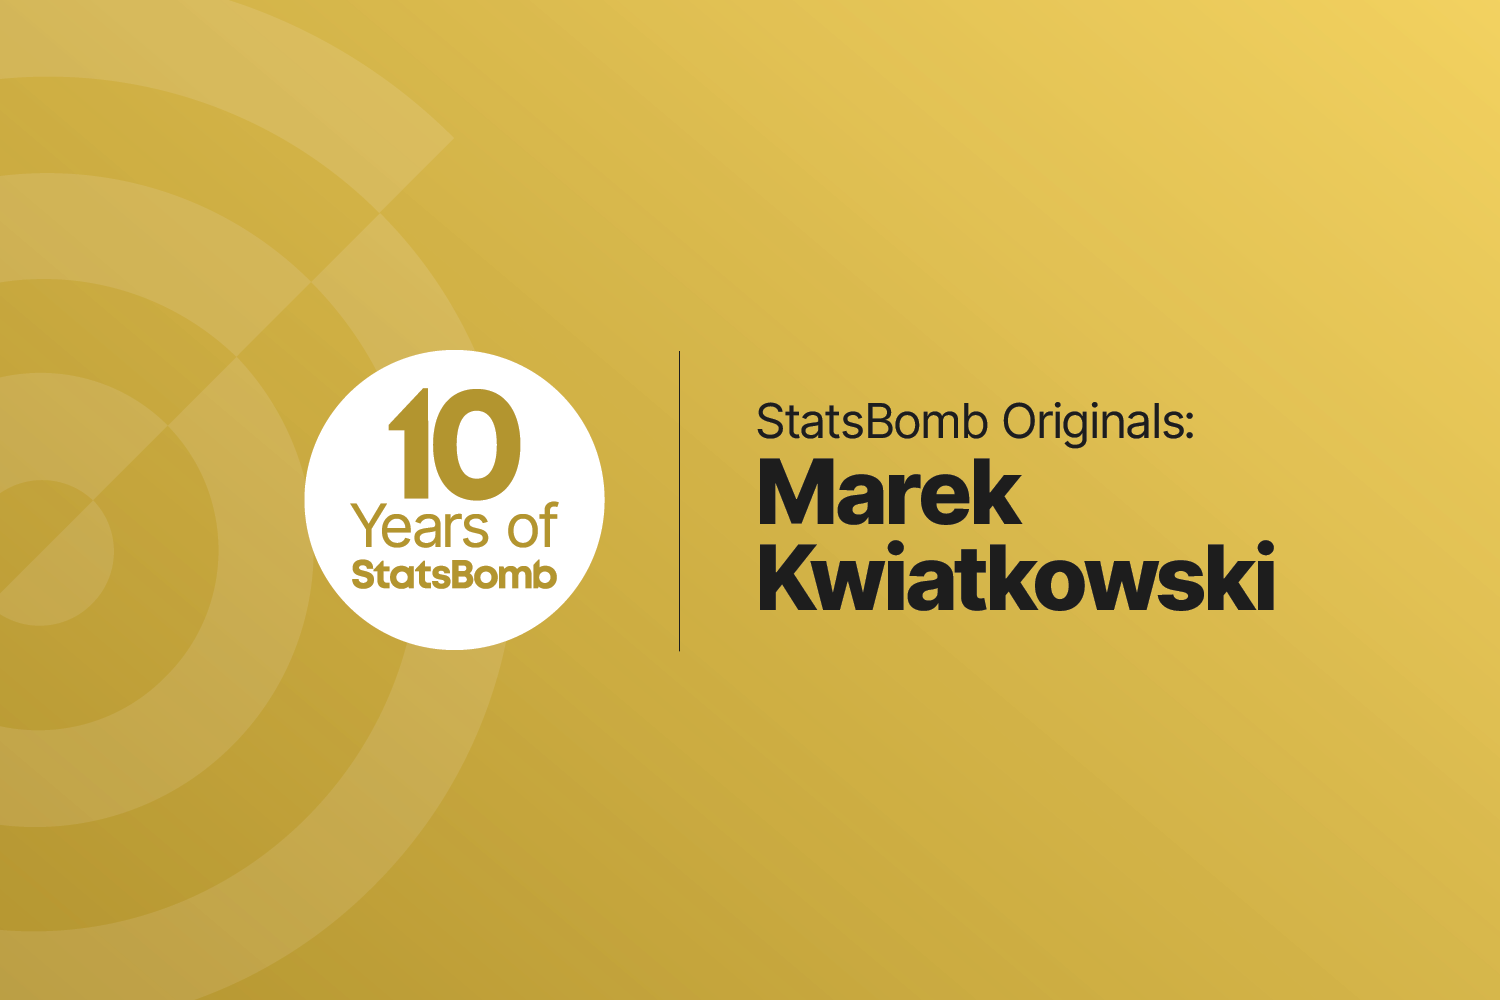 StatsBomb Originals: Marek Kwiatkowski